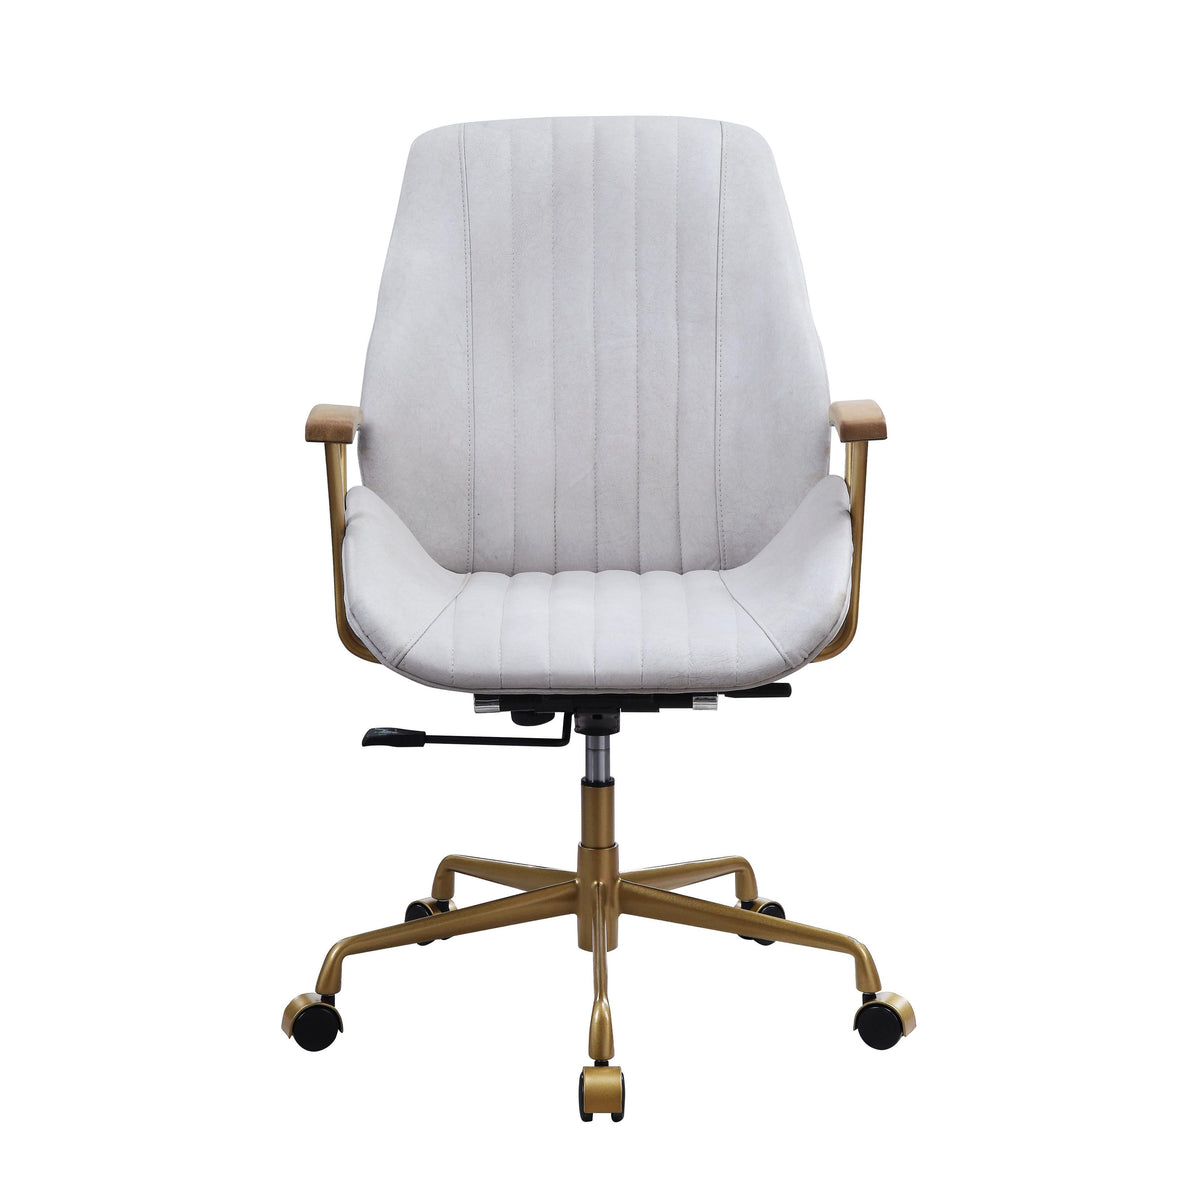 Acme Furniture Hamilton 93241 Office Chair - Vintage White